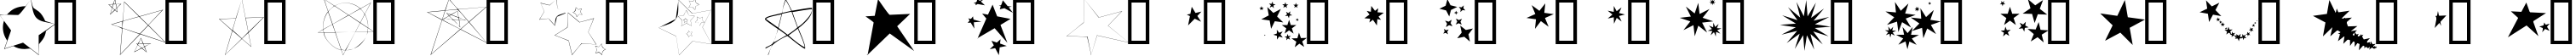 Пример написания английского алфавита шрифтом Freaking Stars